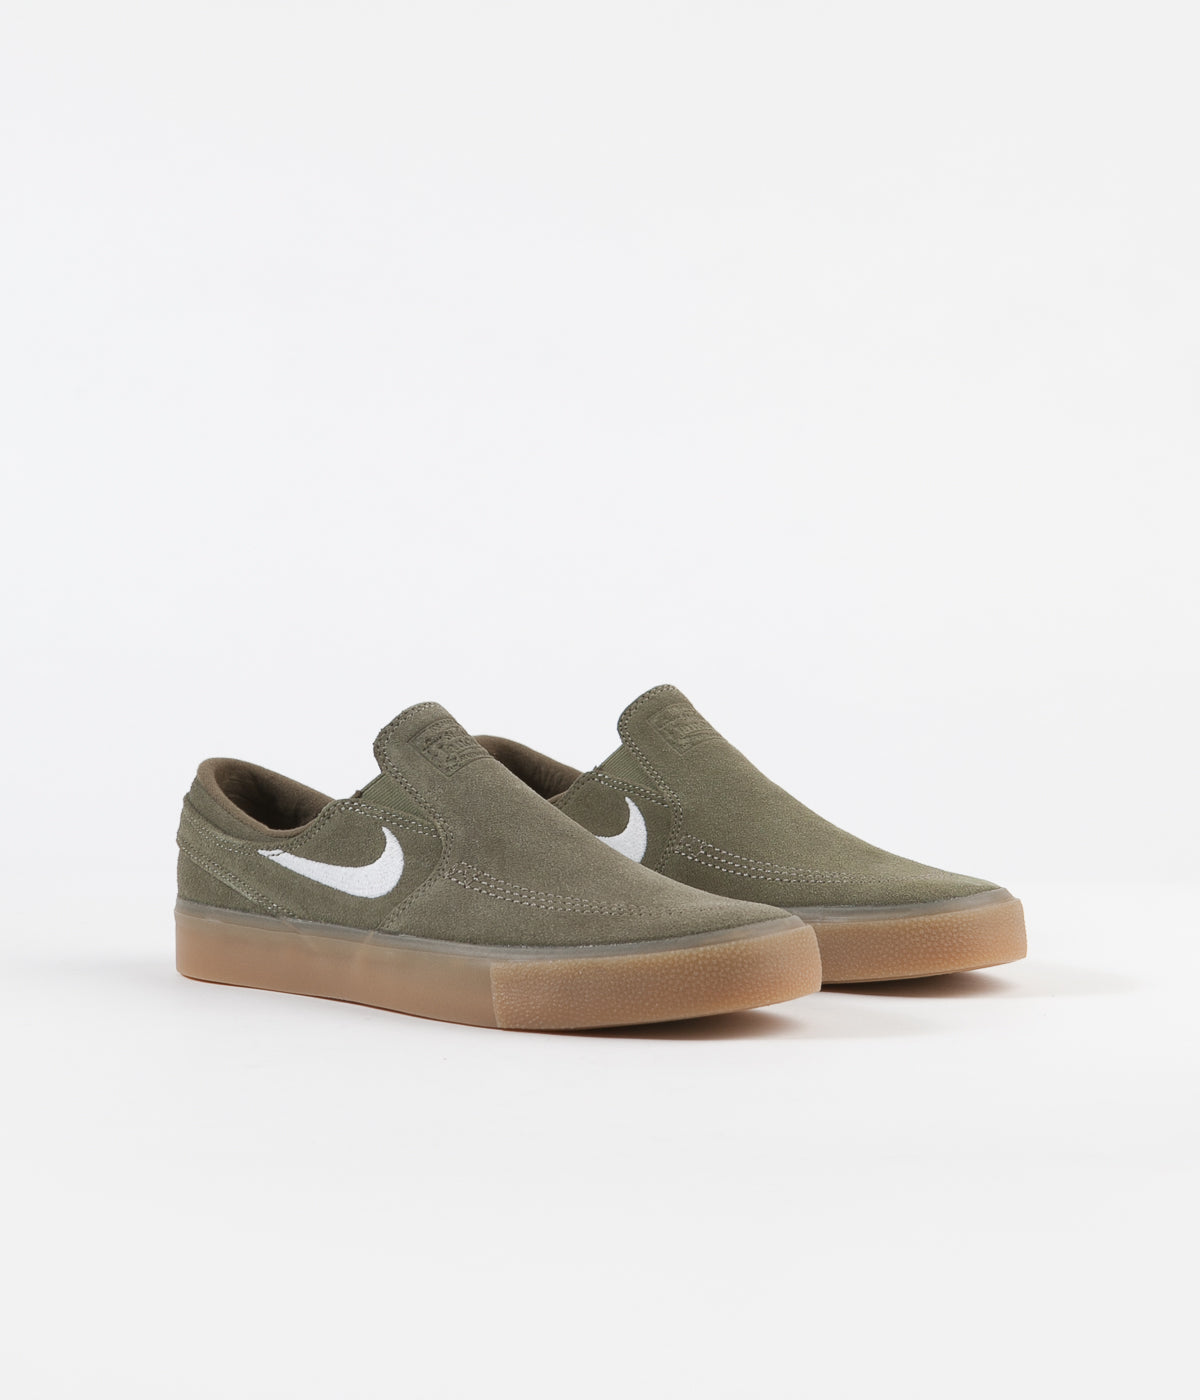 Nike SB Janoski Slip On Remastered Shoes - Medium Olive / White - Medi ...